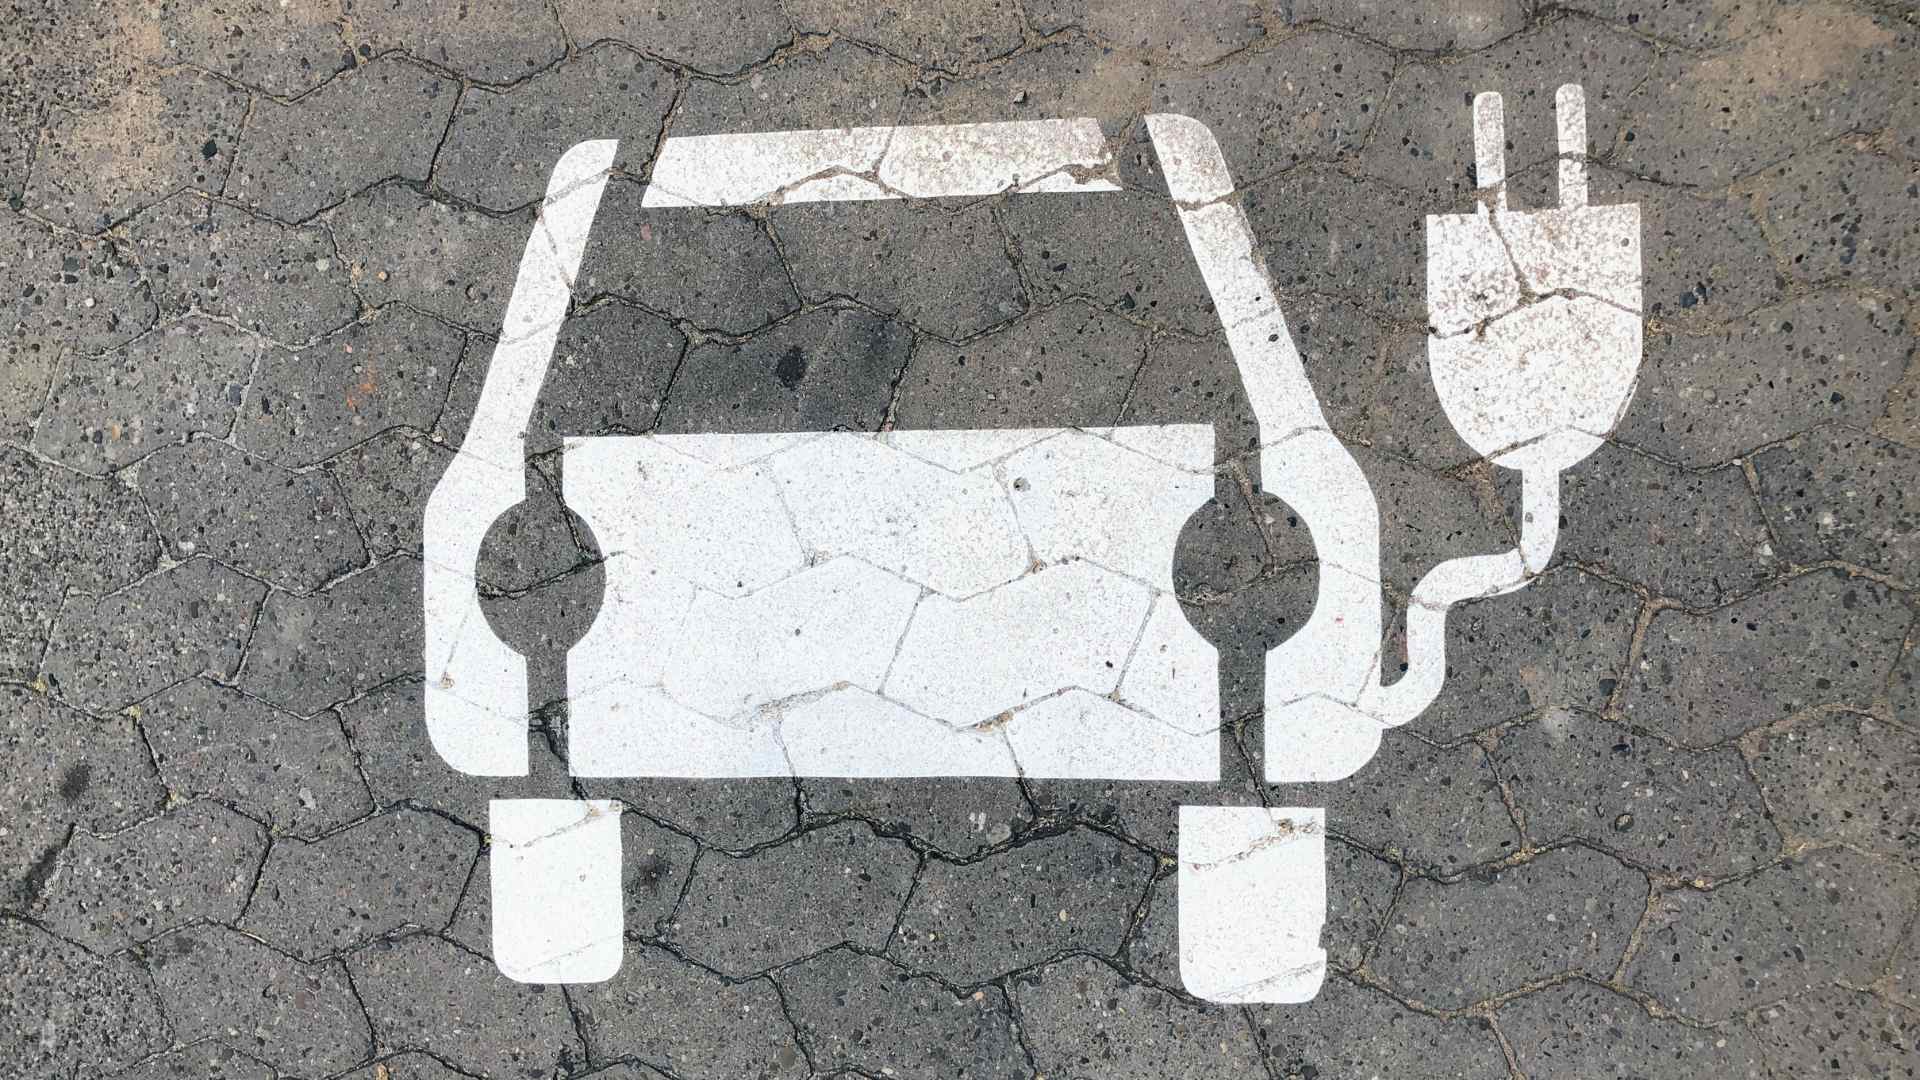 Instalación puntos de carga en parking comunitario